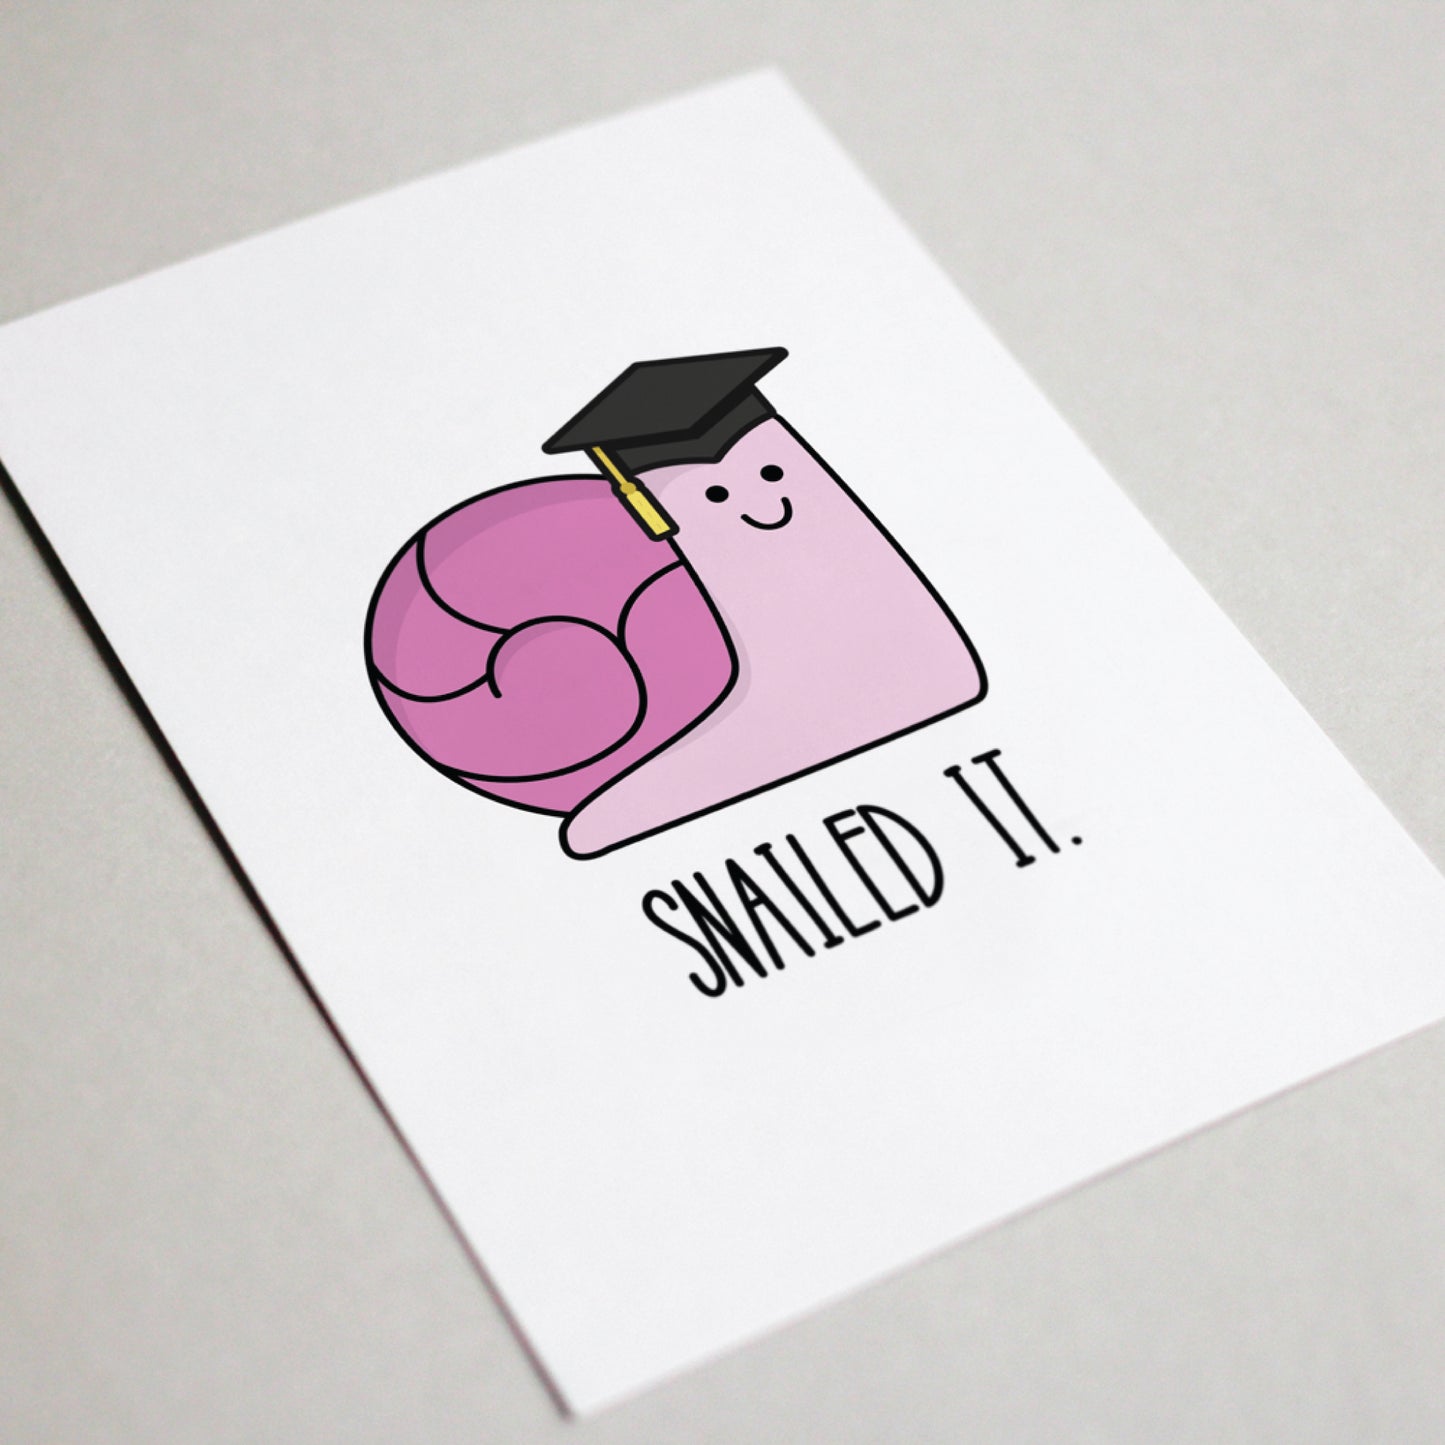 Snailed It Graduation Card